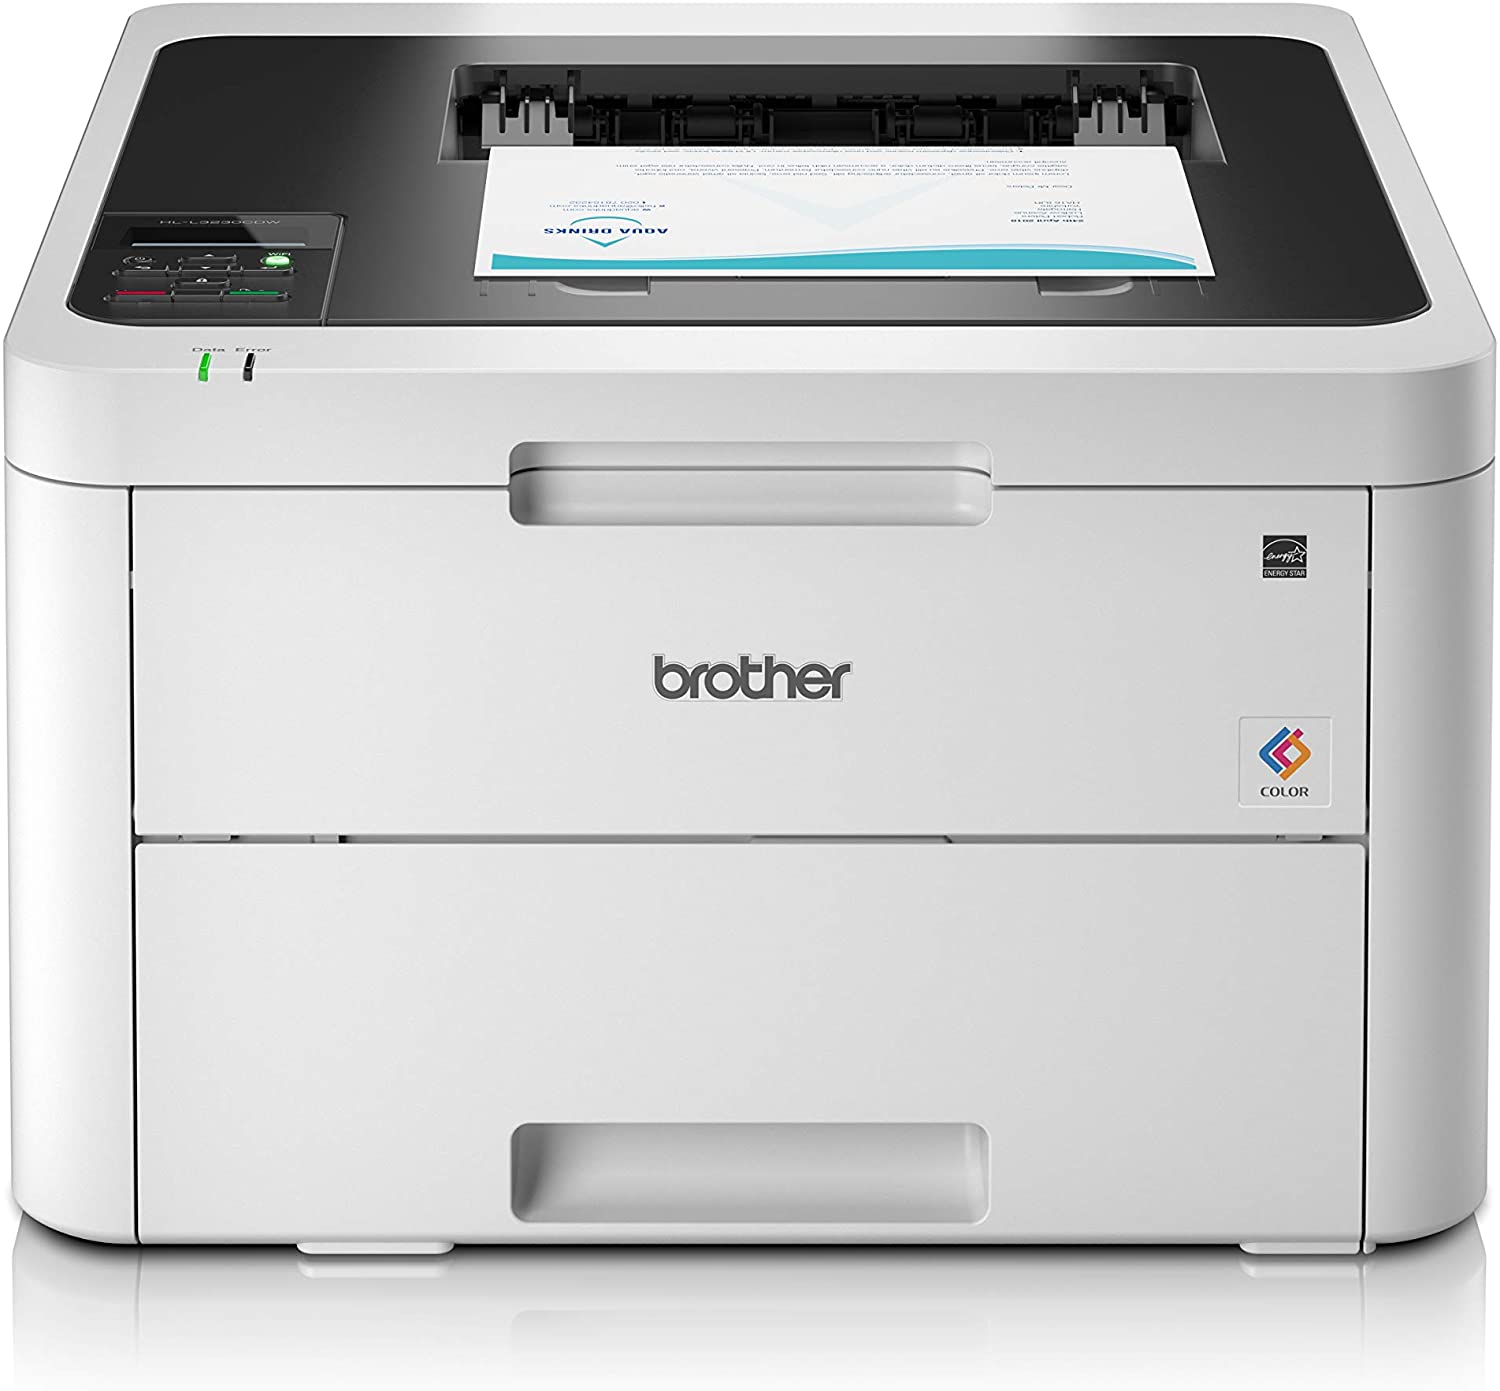  Brother HL-L3230CDW Colour Laser Printer reviews uk